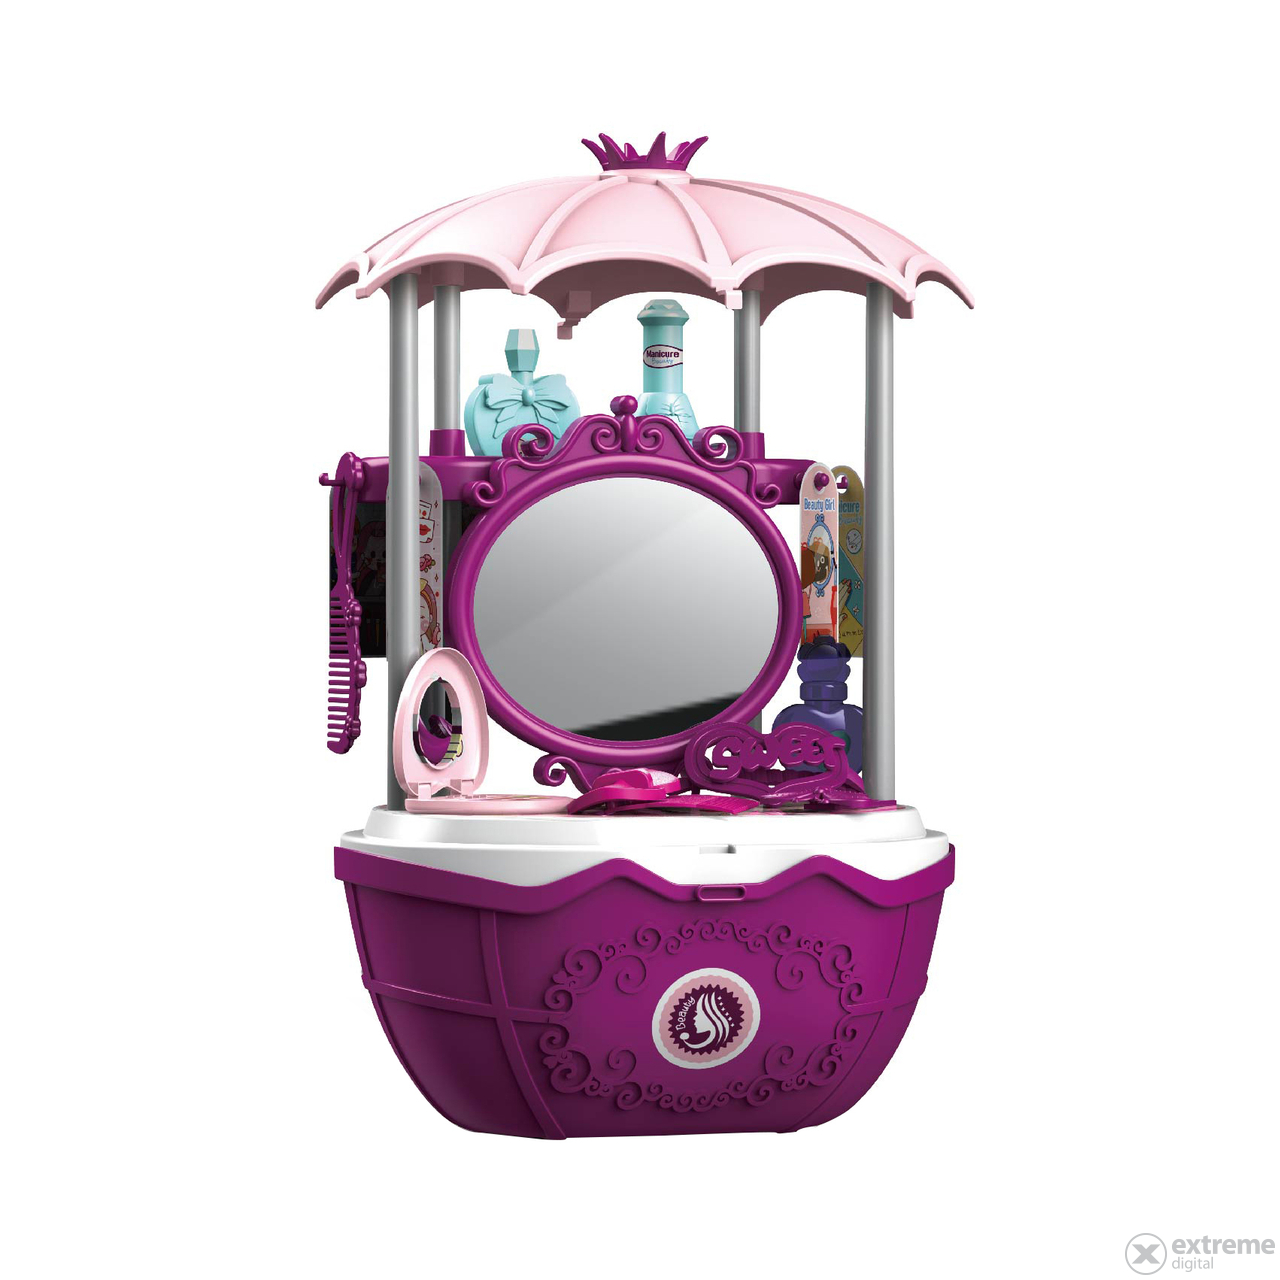 M-Toys Set igrač, frizerski set 4 v 1, 31 kos, roza/vijolična (5949129018426)